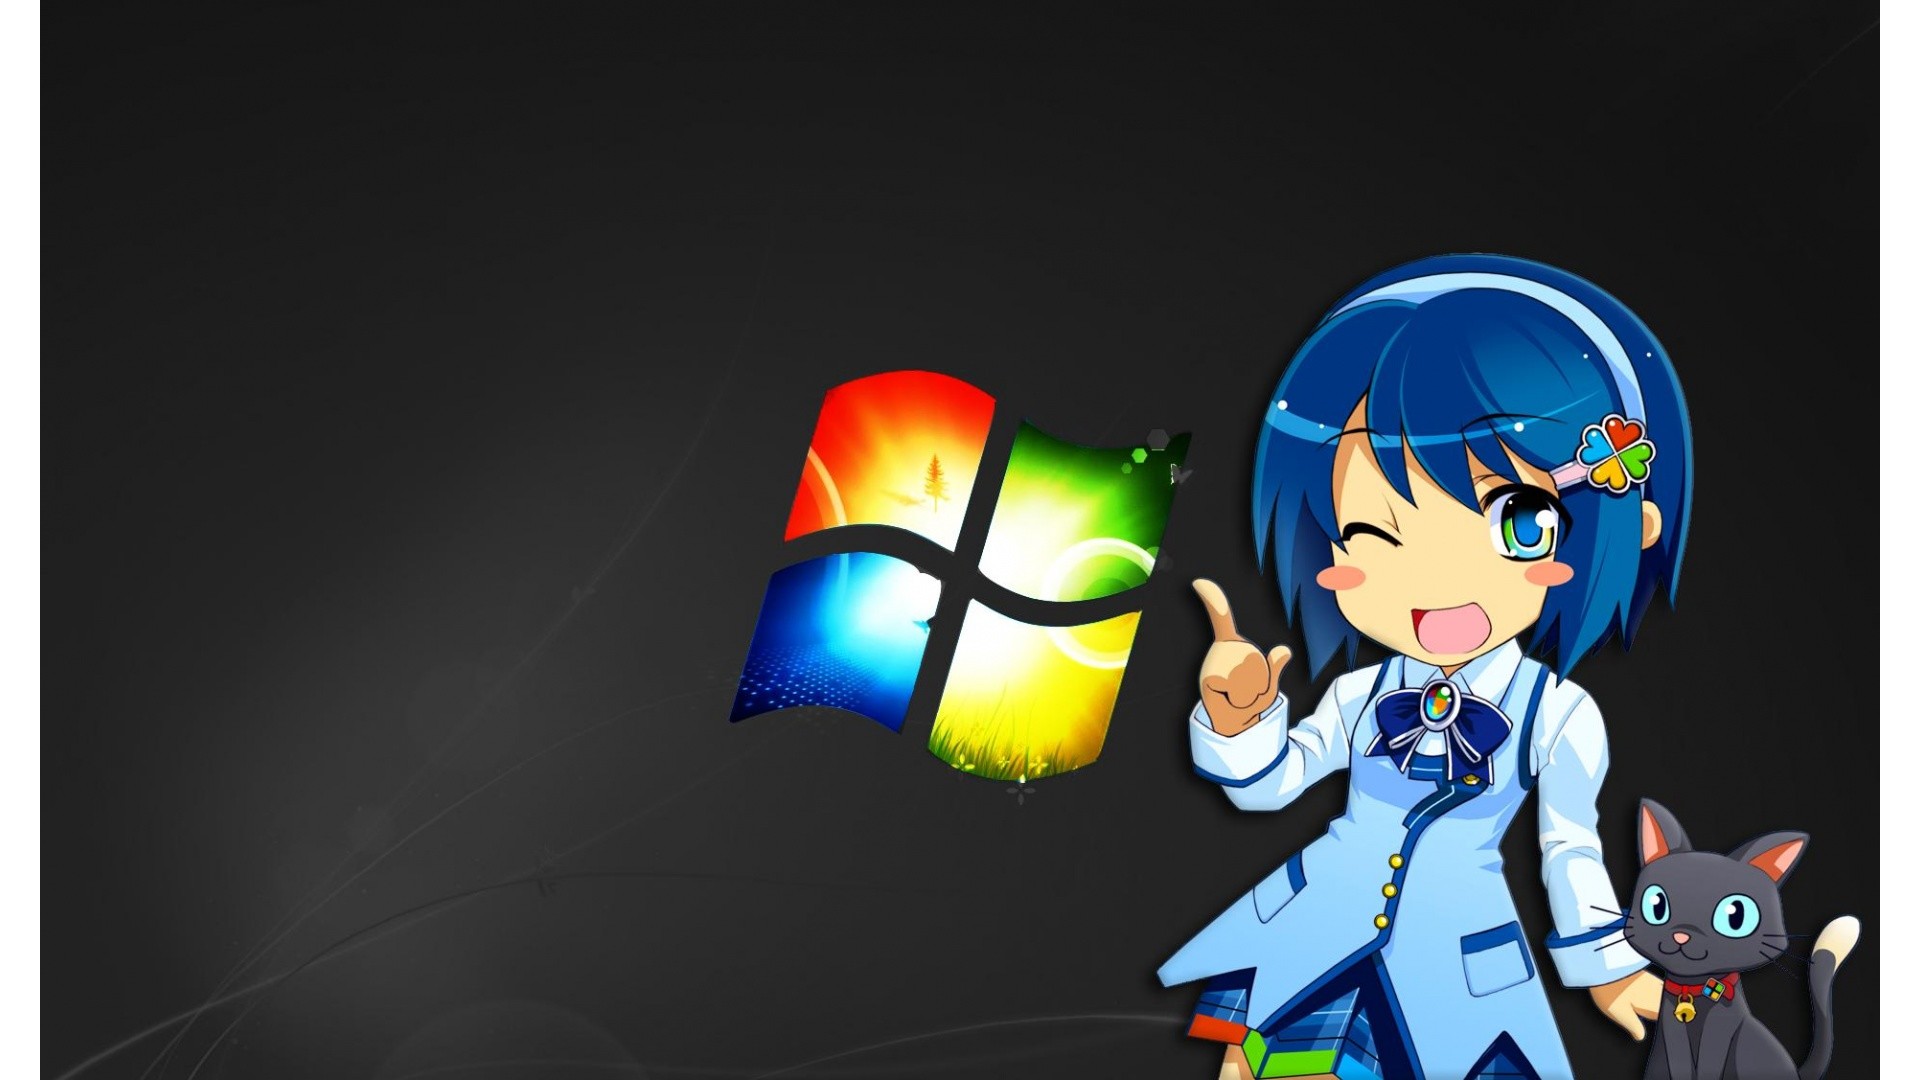 Windows 10 Wallpaper Anime (63+ images)